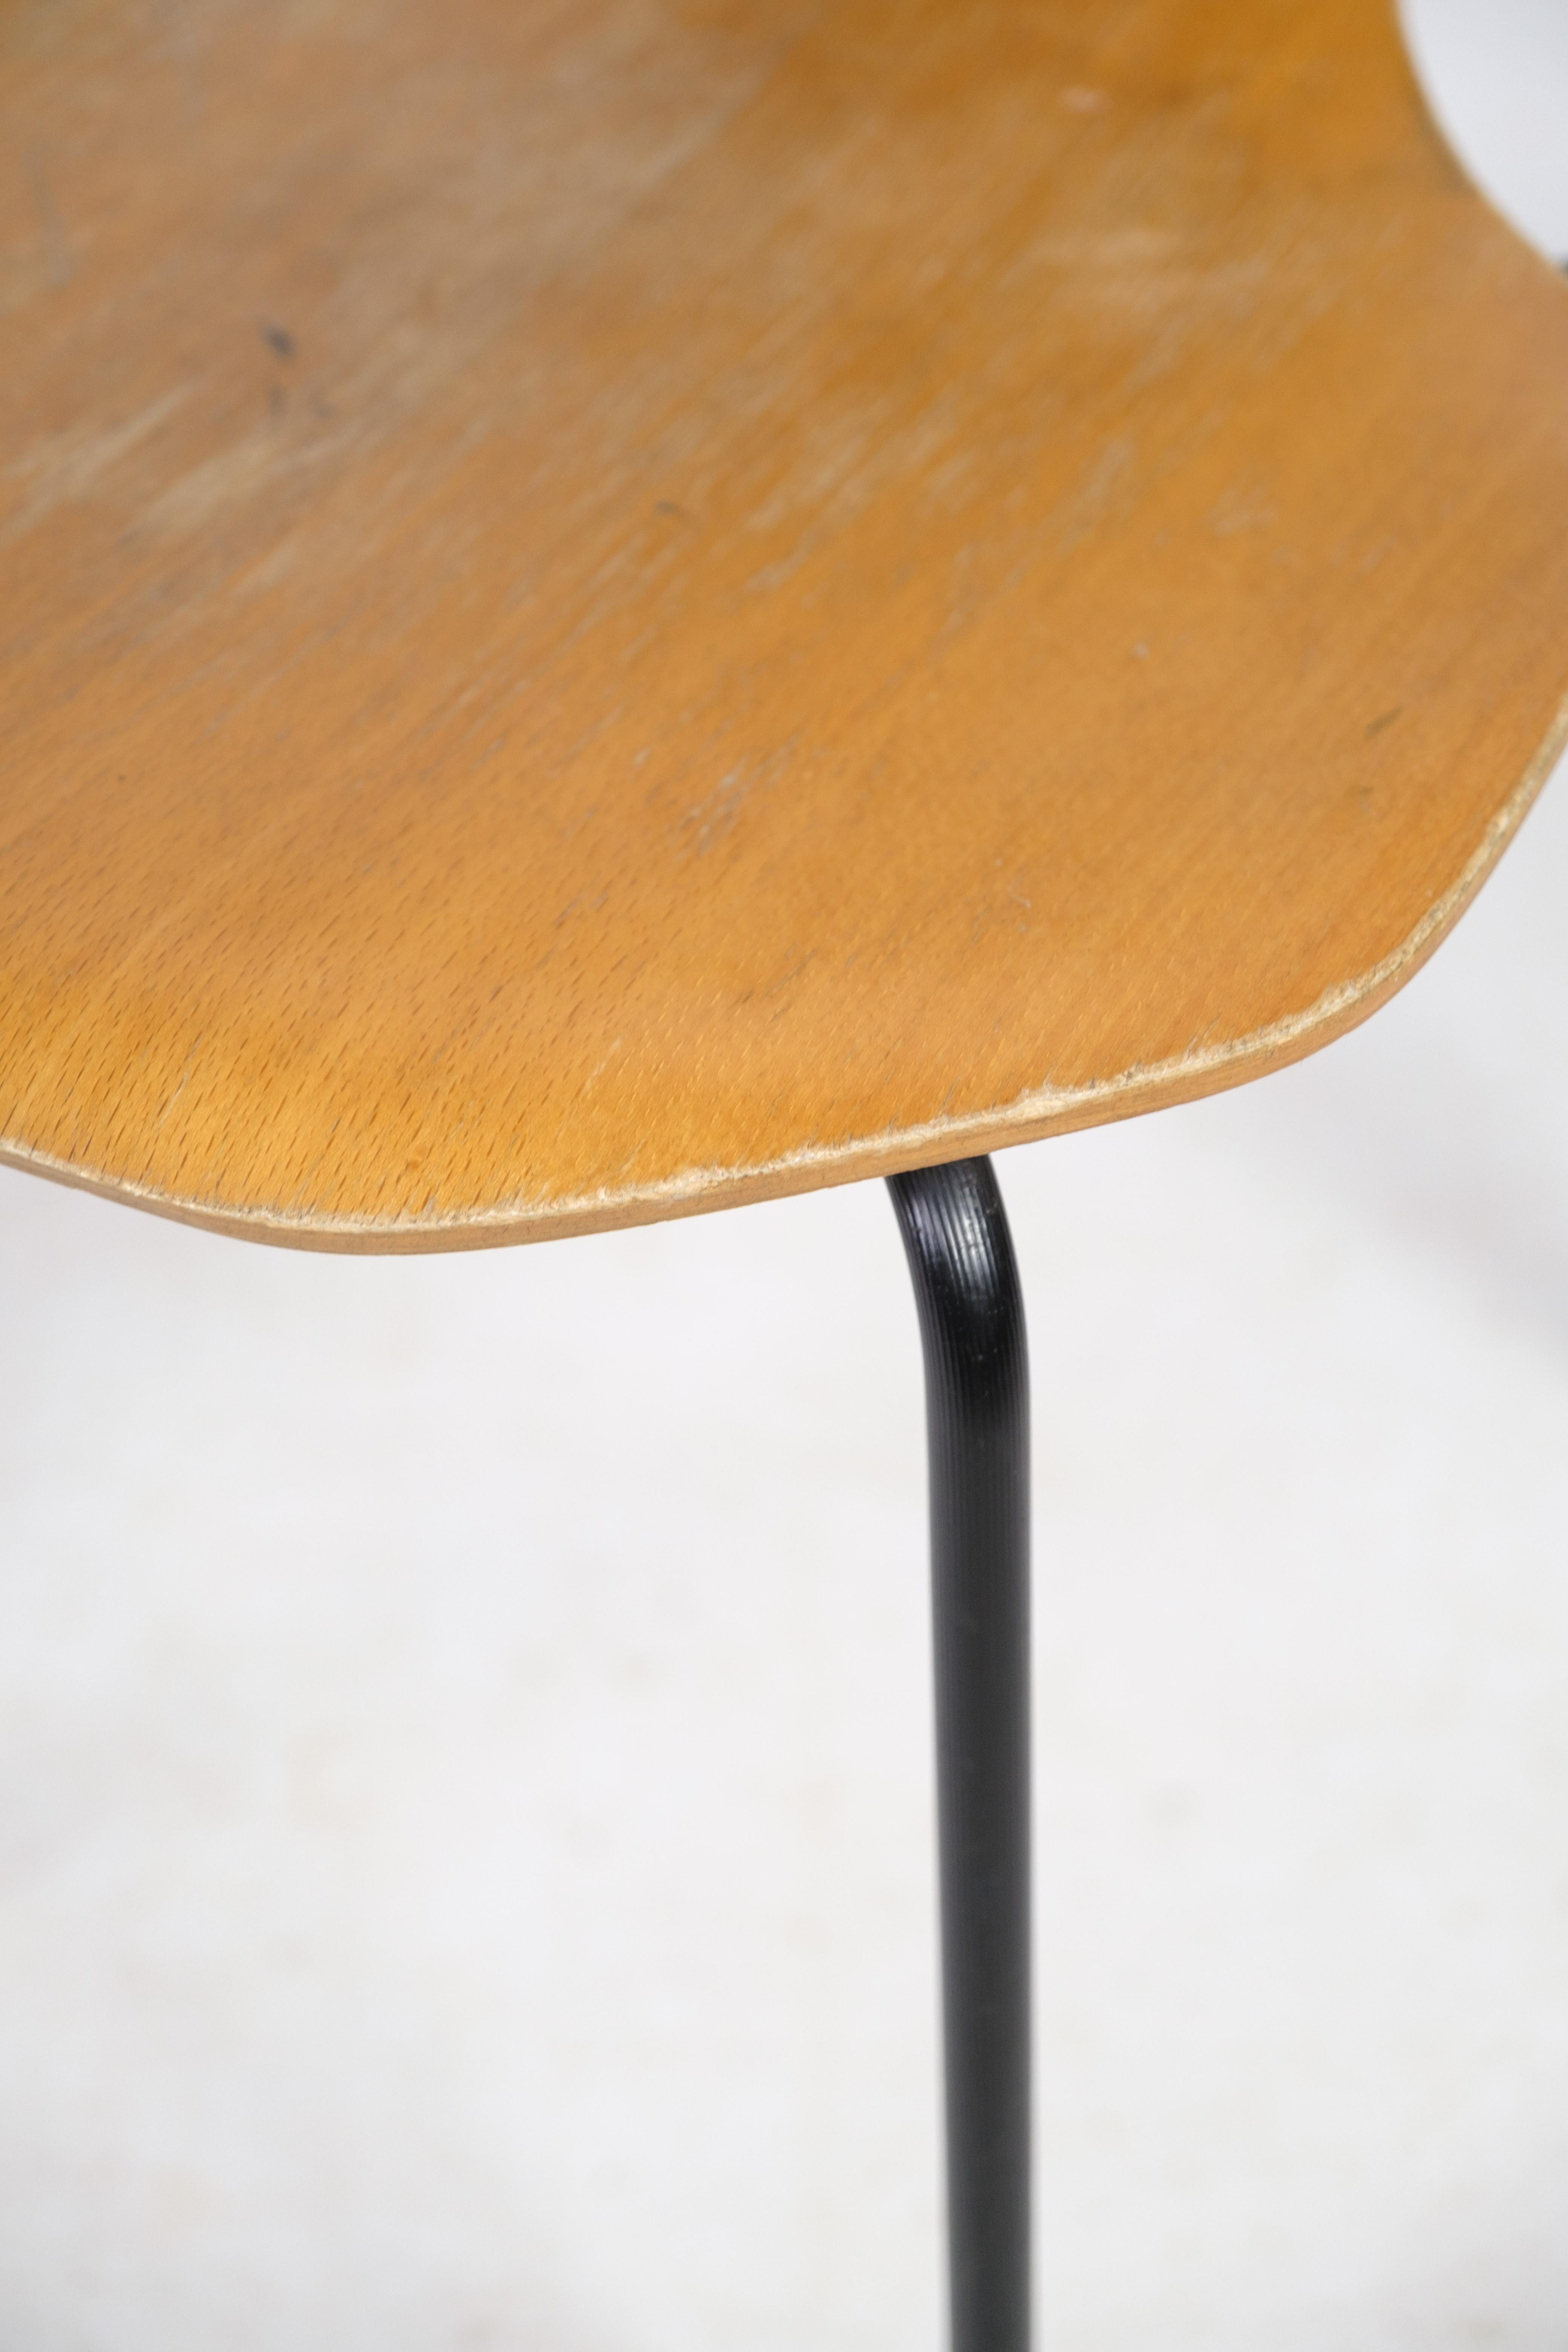 Rubber Set of Four, Model 3103, 'T-Chair', by Arne Jacobsen Oak, Fritz Hansen 1960s For Sale